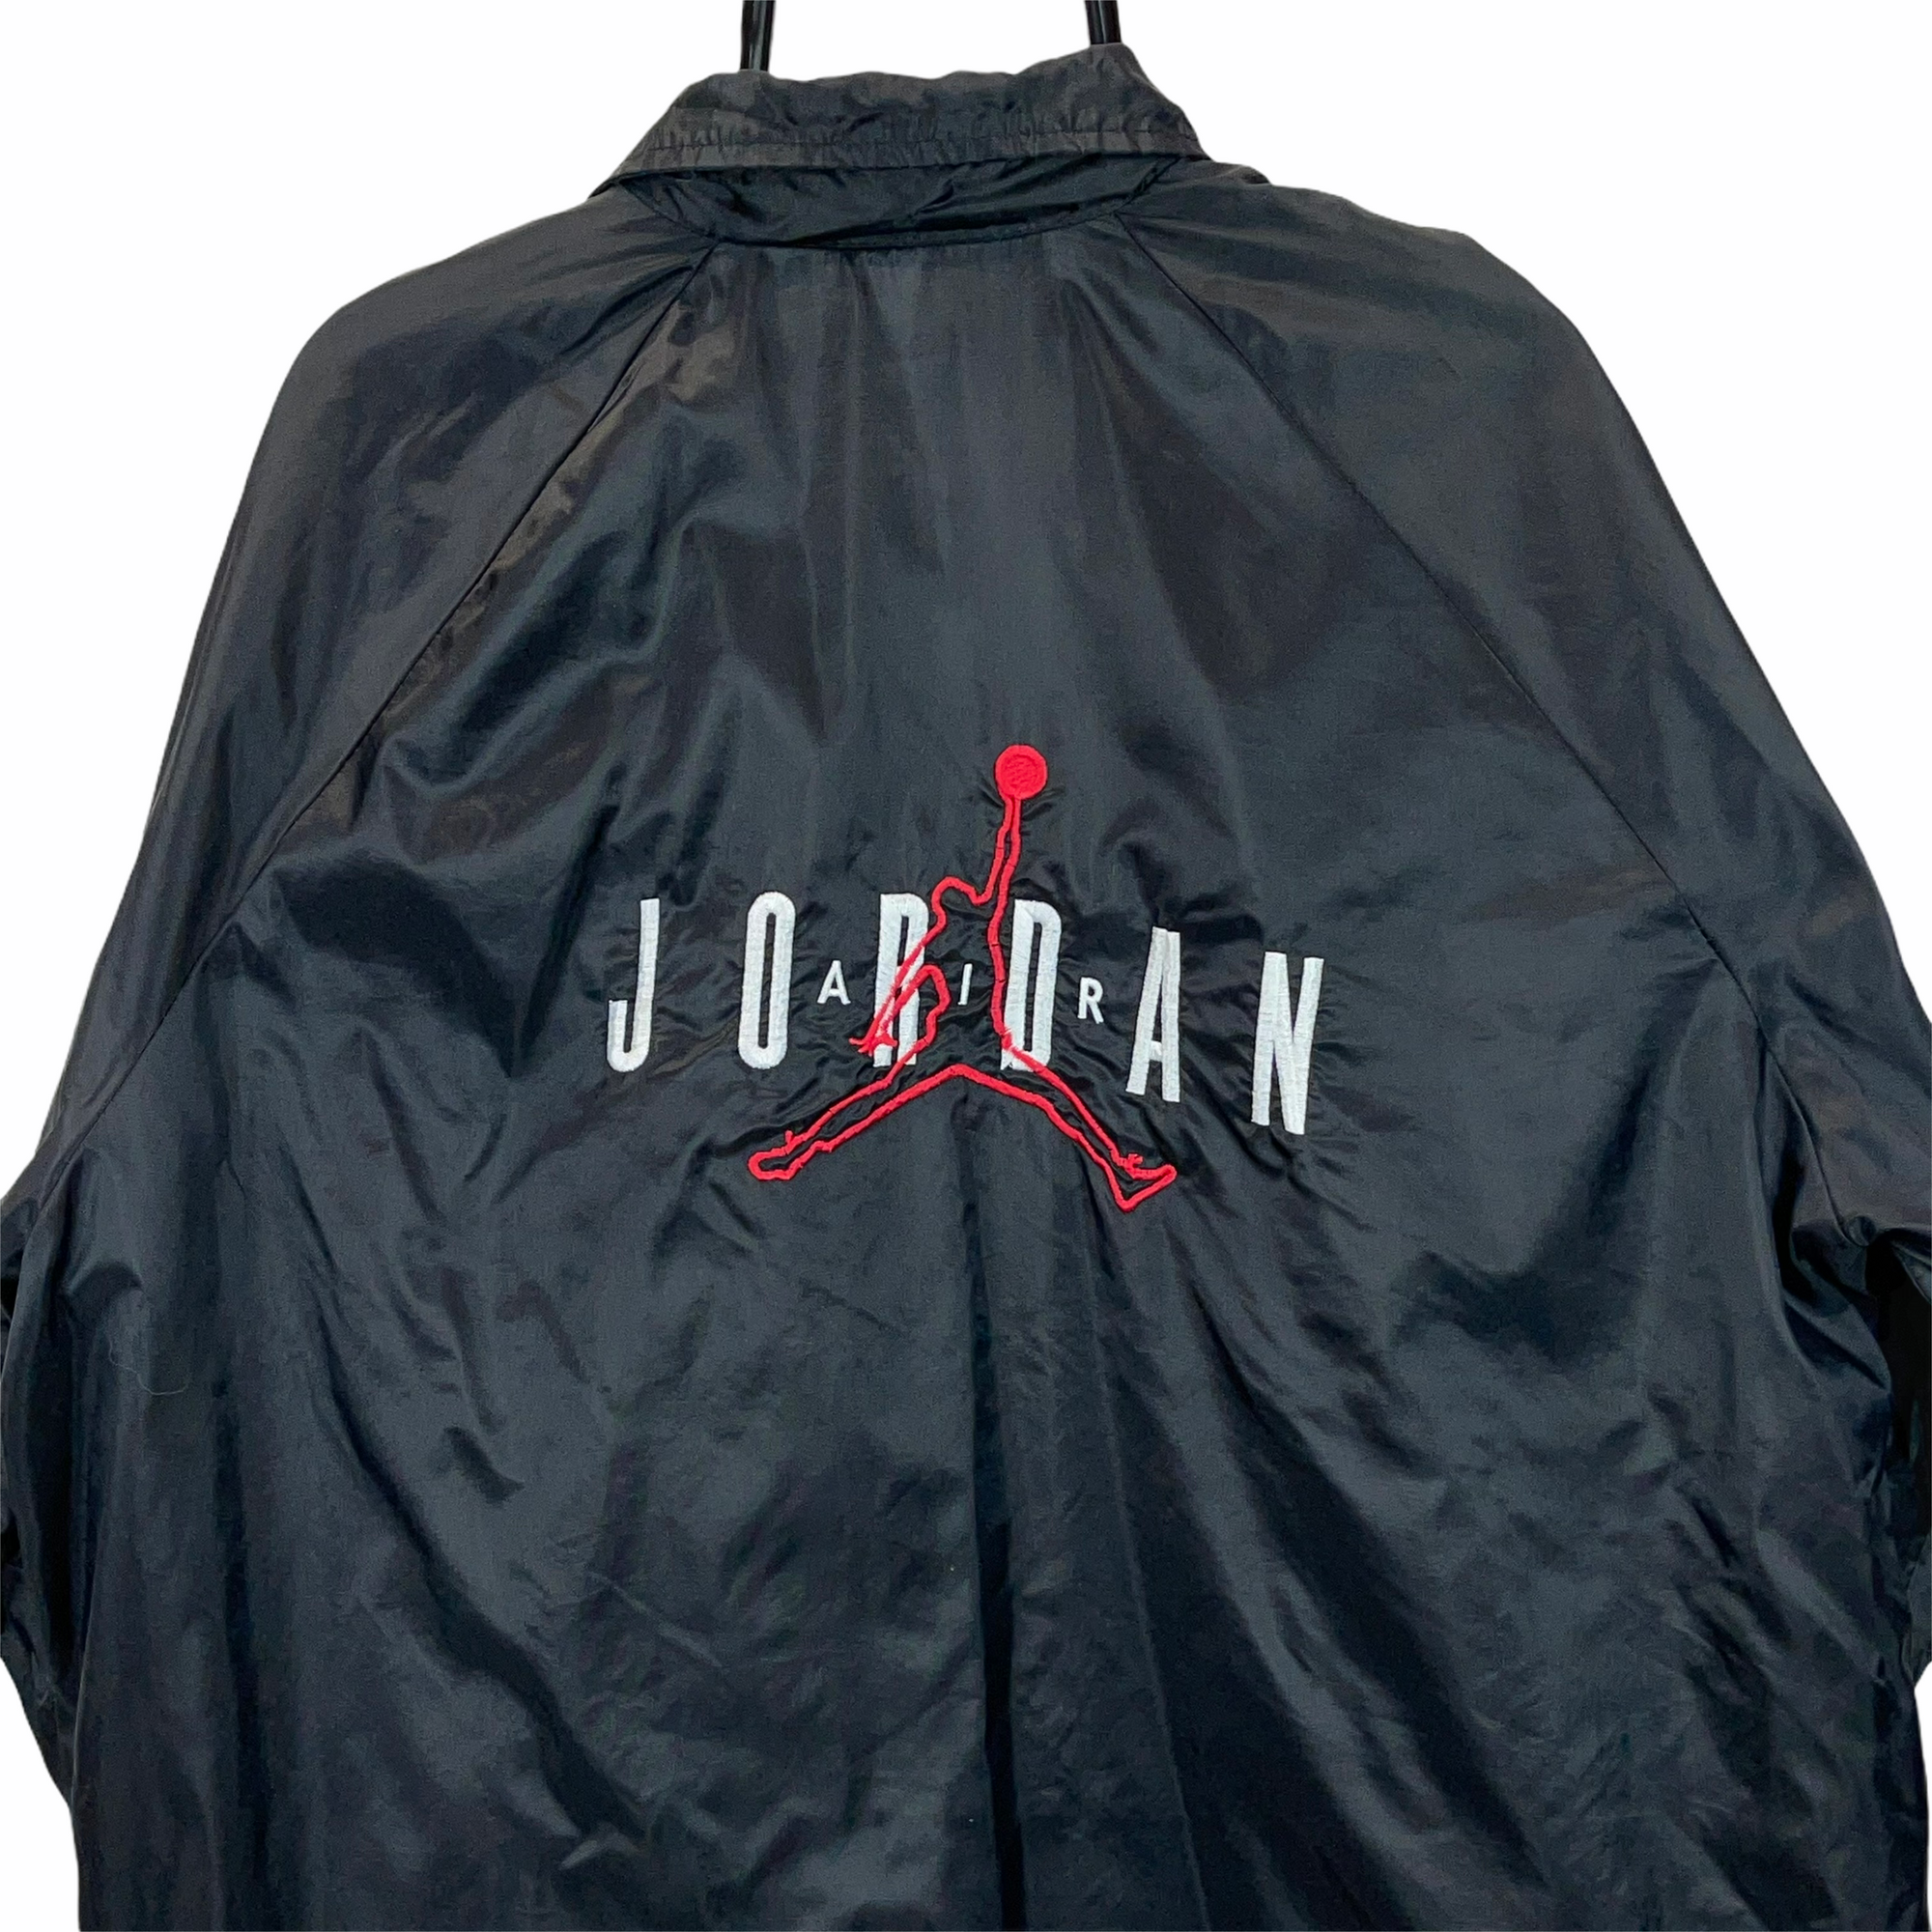 Vintage 90s Nike Air Jordan Lightweight Jacket - Men's XL/Women's XXL